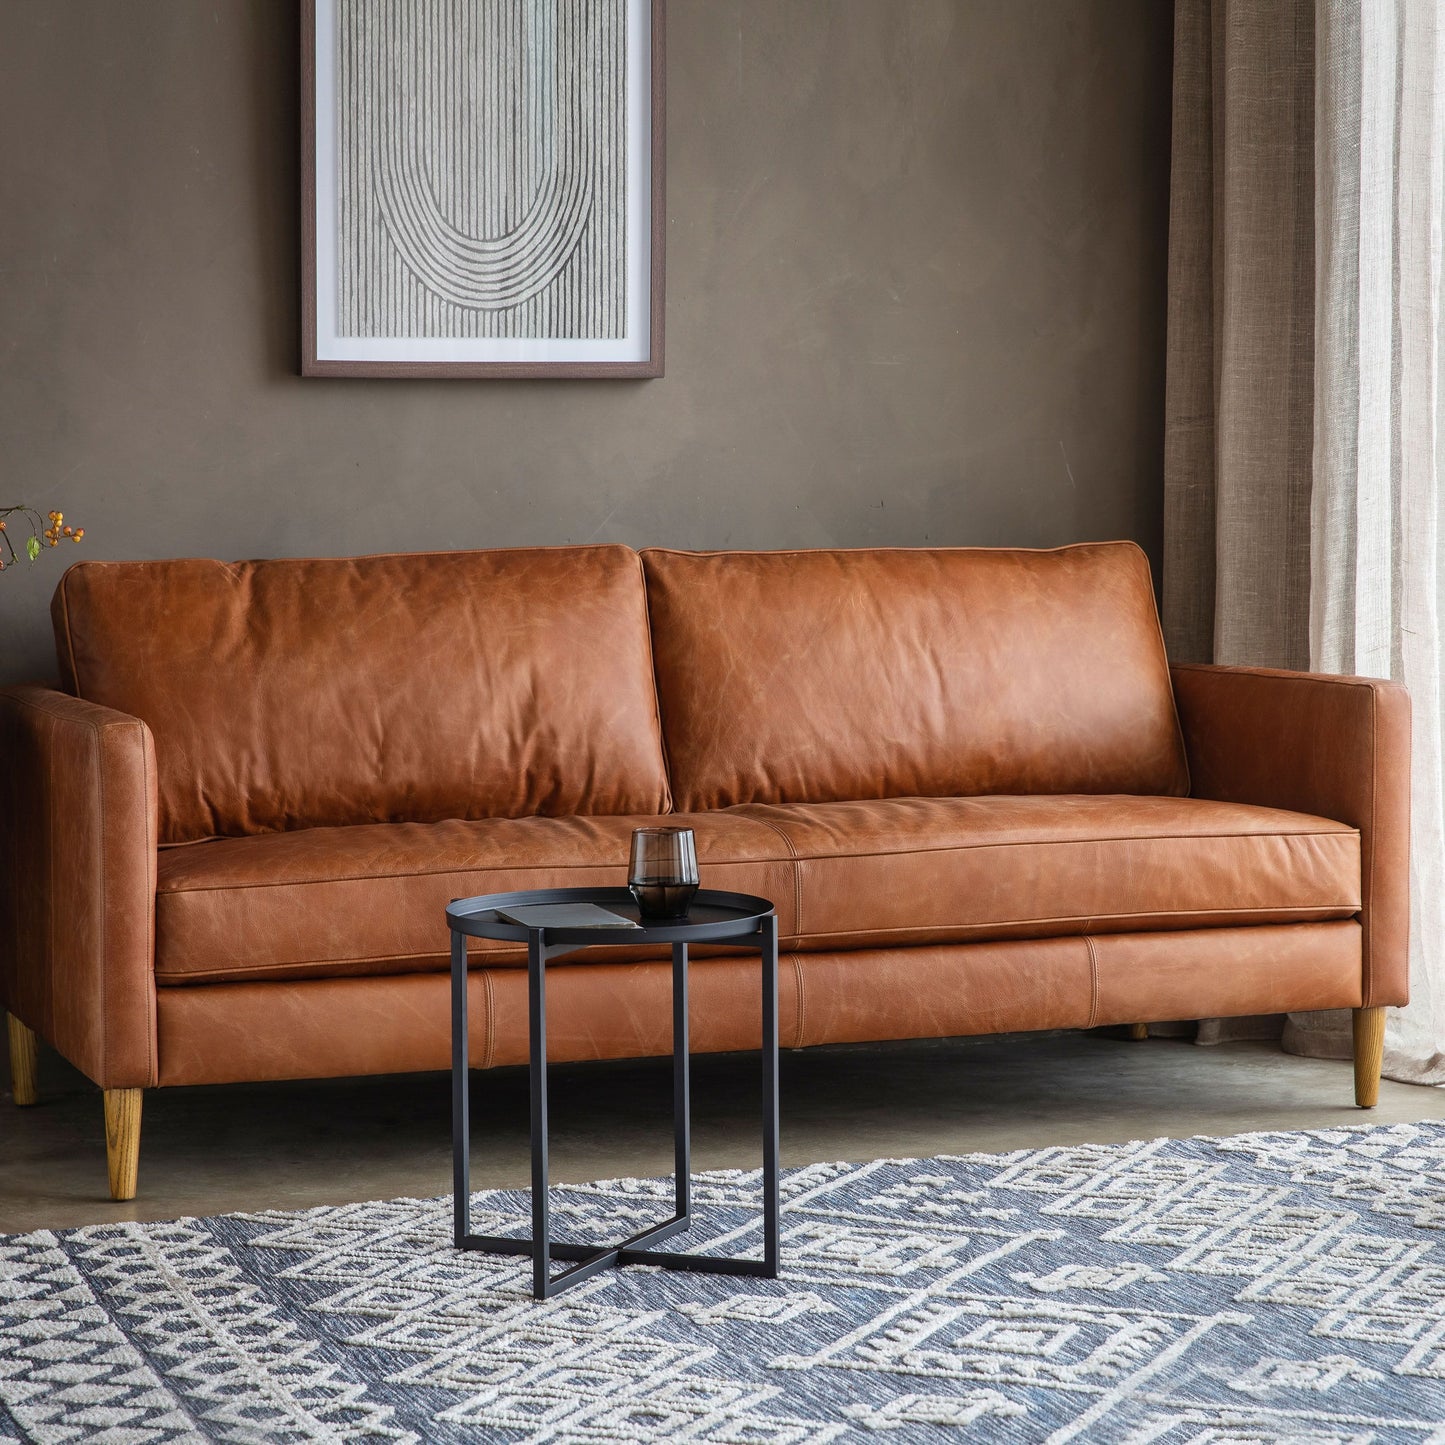 Osborne 2 Seater Sofa Vintage Brown Leather Gallery Direct Homebound